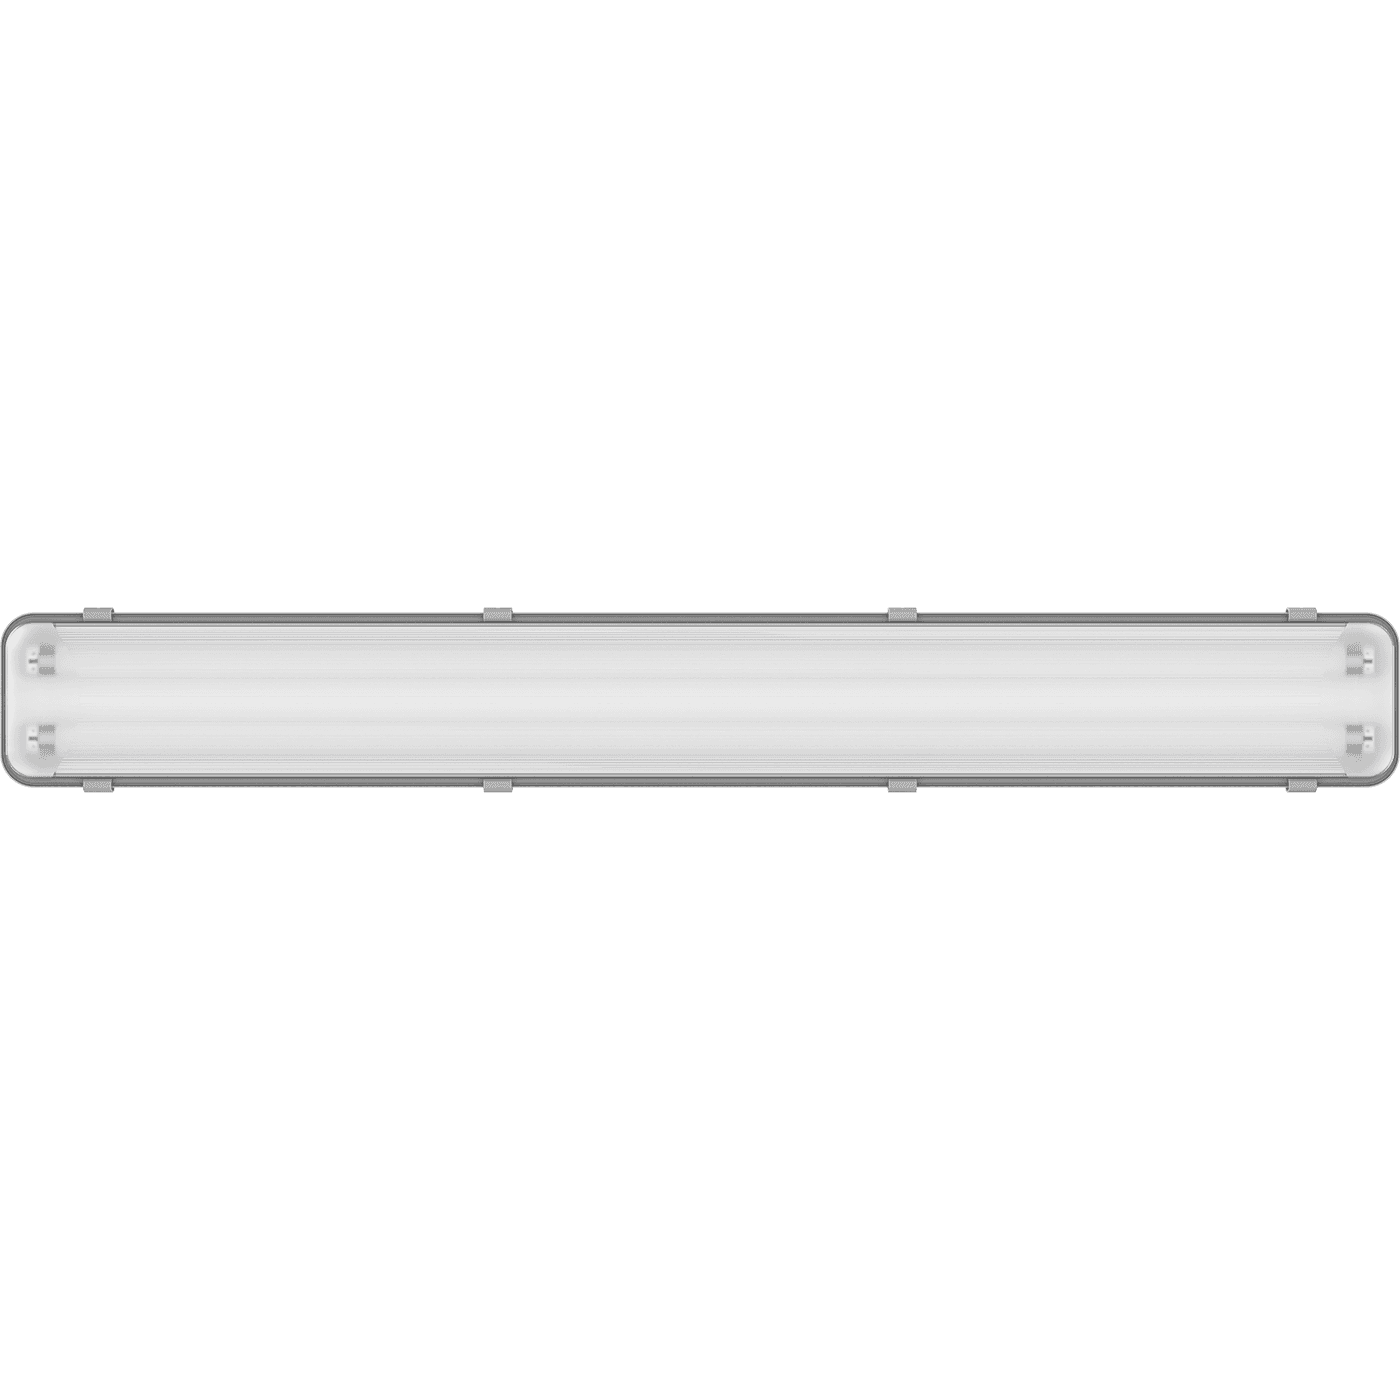 ламповые ARCTIC 228 (PC/SMC) HF, артикул 1069000340